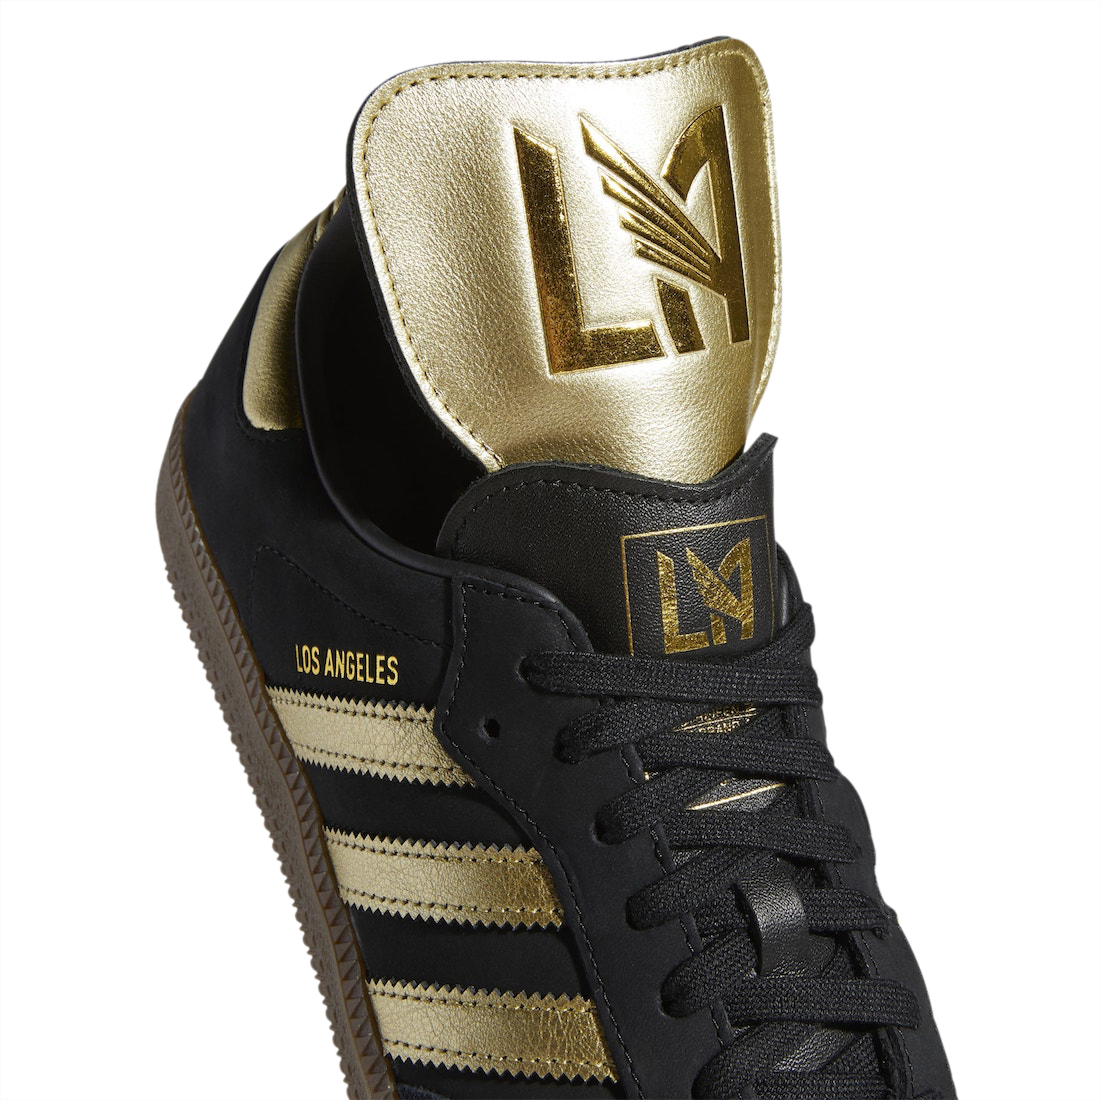 BUY Adidas Samba LAFC Black Gold